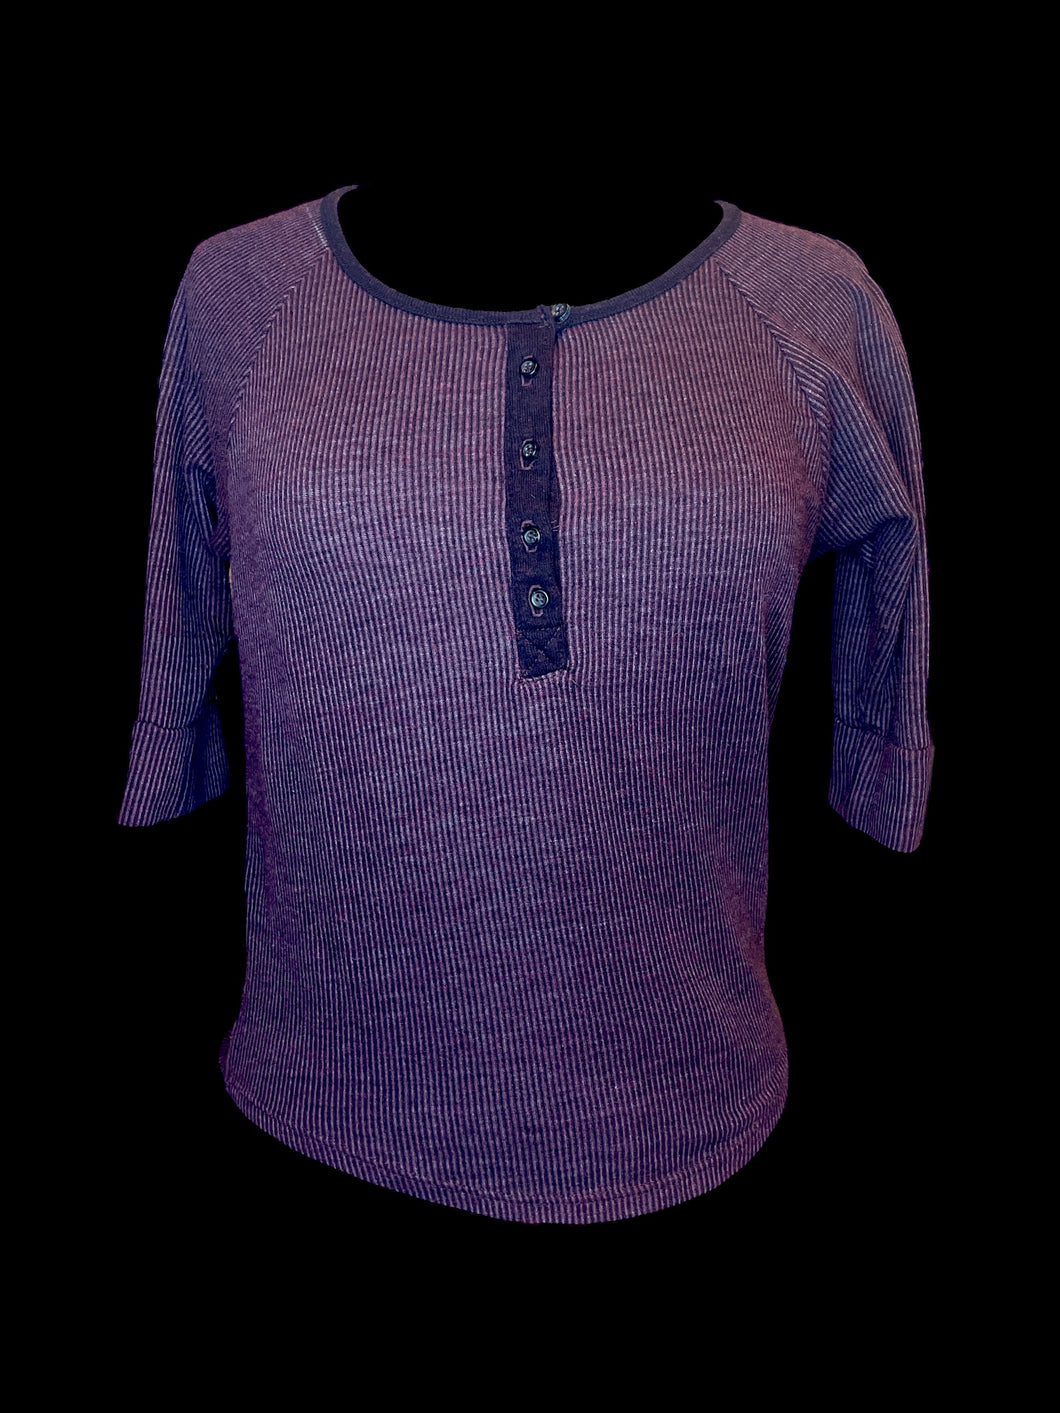 XS Purple knit 3/4 sleeve hi-lo top w/ quarter button down